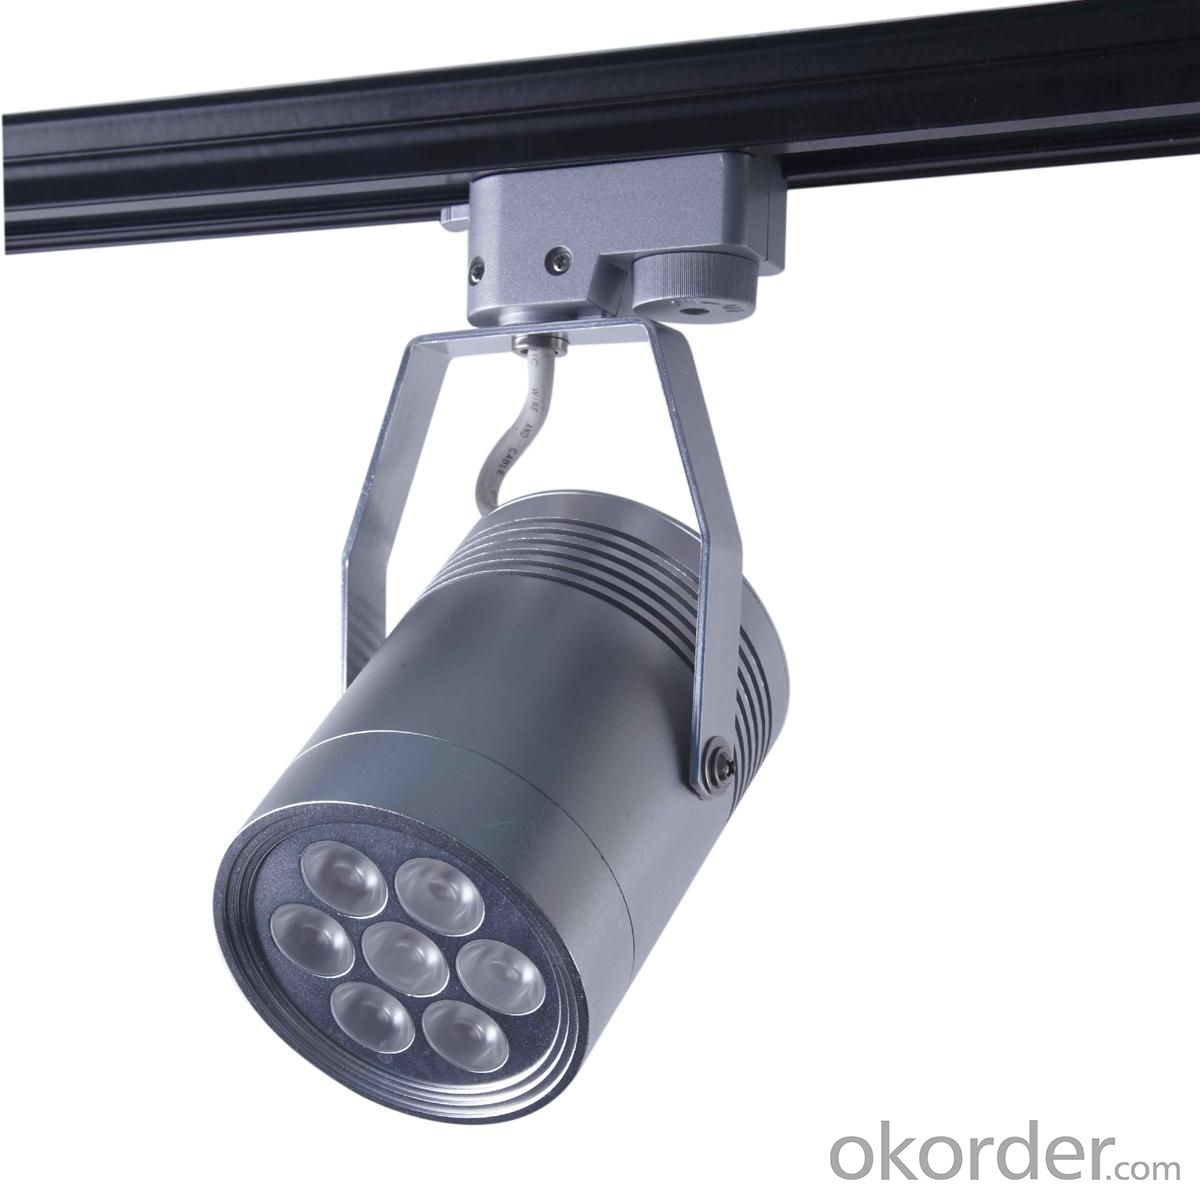 MR16-5W-05 LED Spot Light Lens Series COB LED Inside